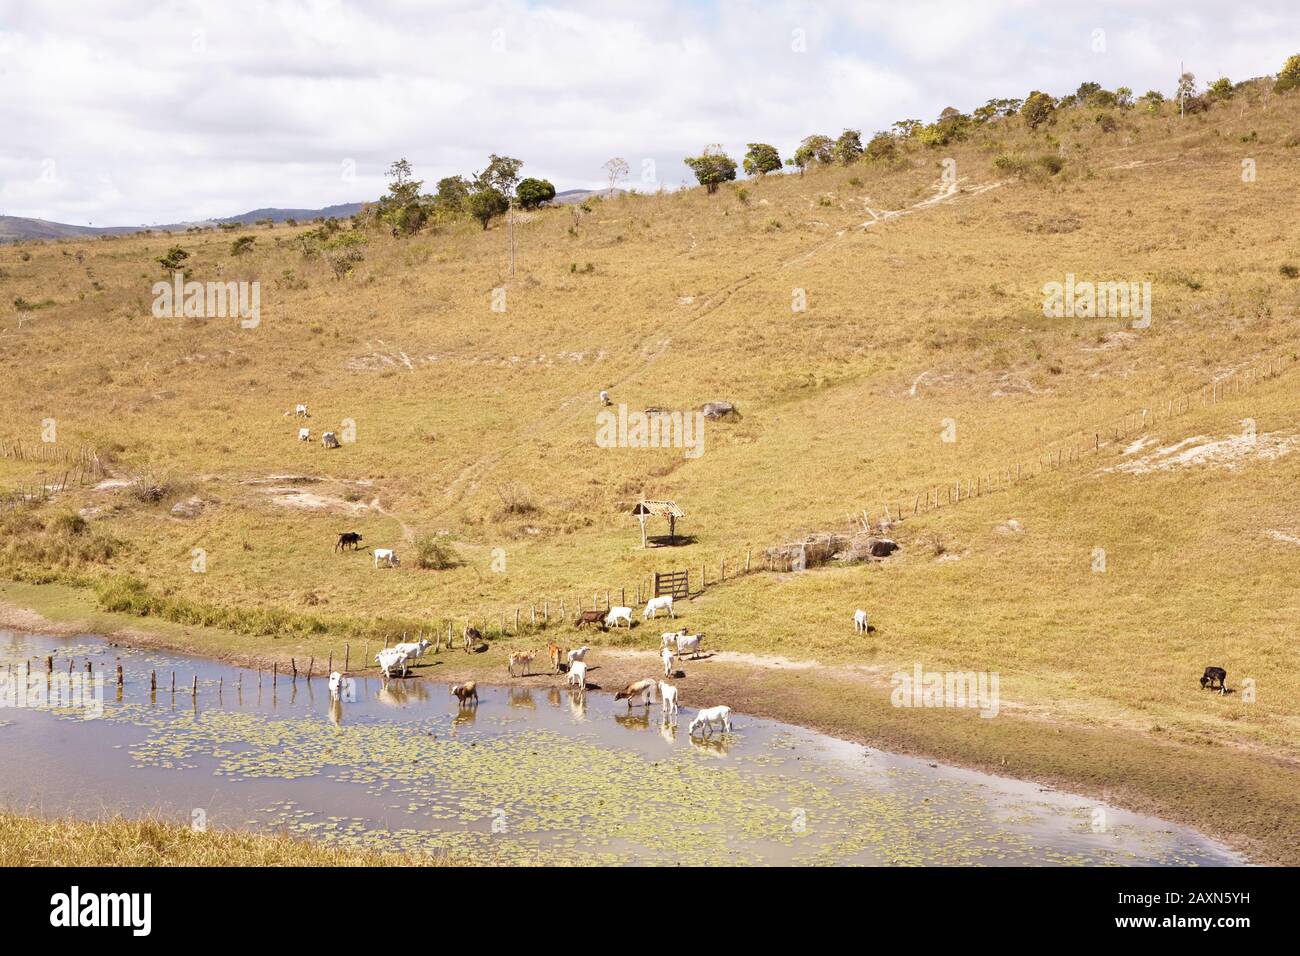 Bos taurus,  Animals Drinking Water in Dam, Boa Nova, Bahia, Brazil Stock Photo